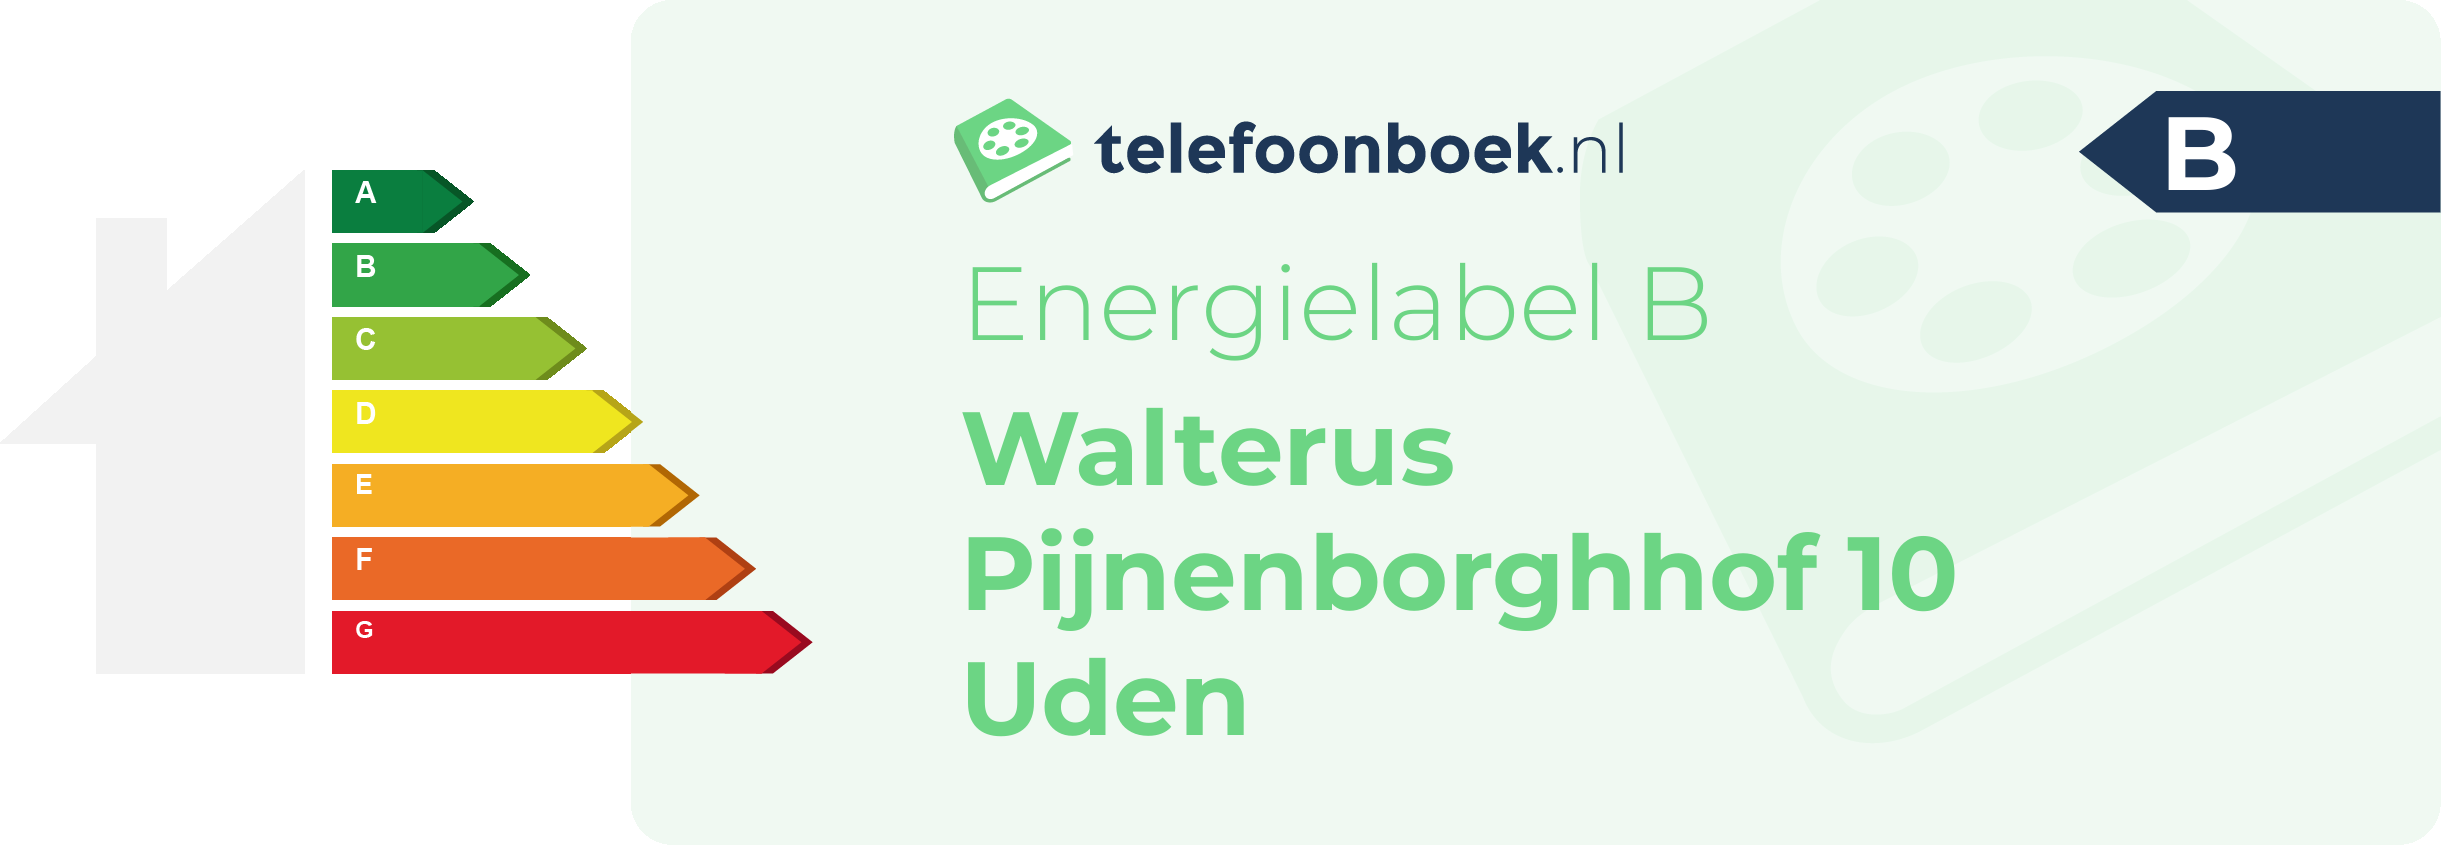 Energielabel Walterus Pijnenborghhof 10 Uden